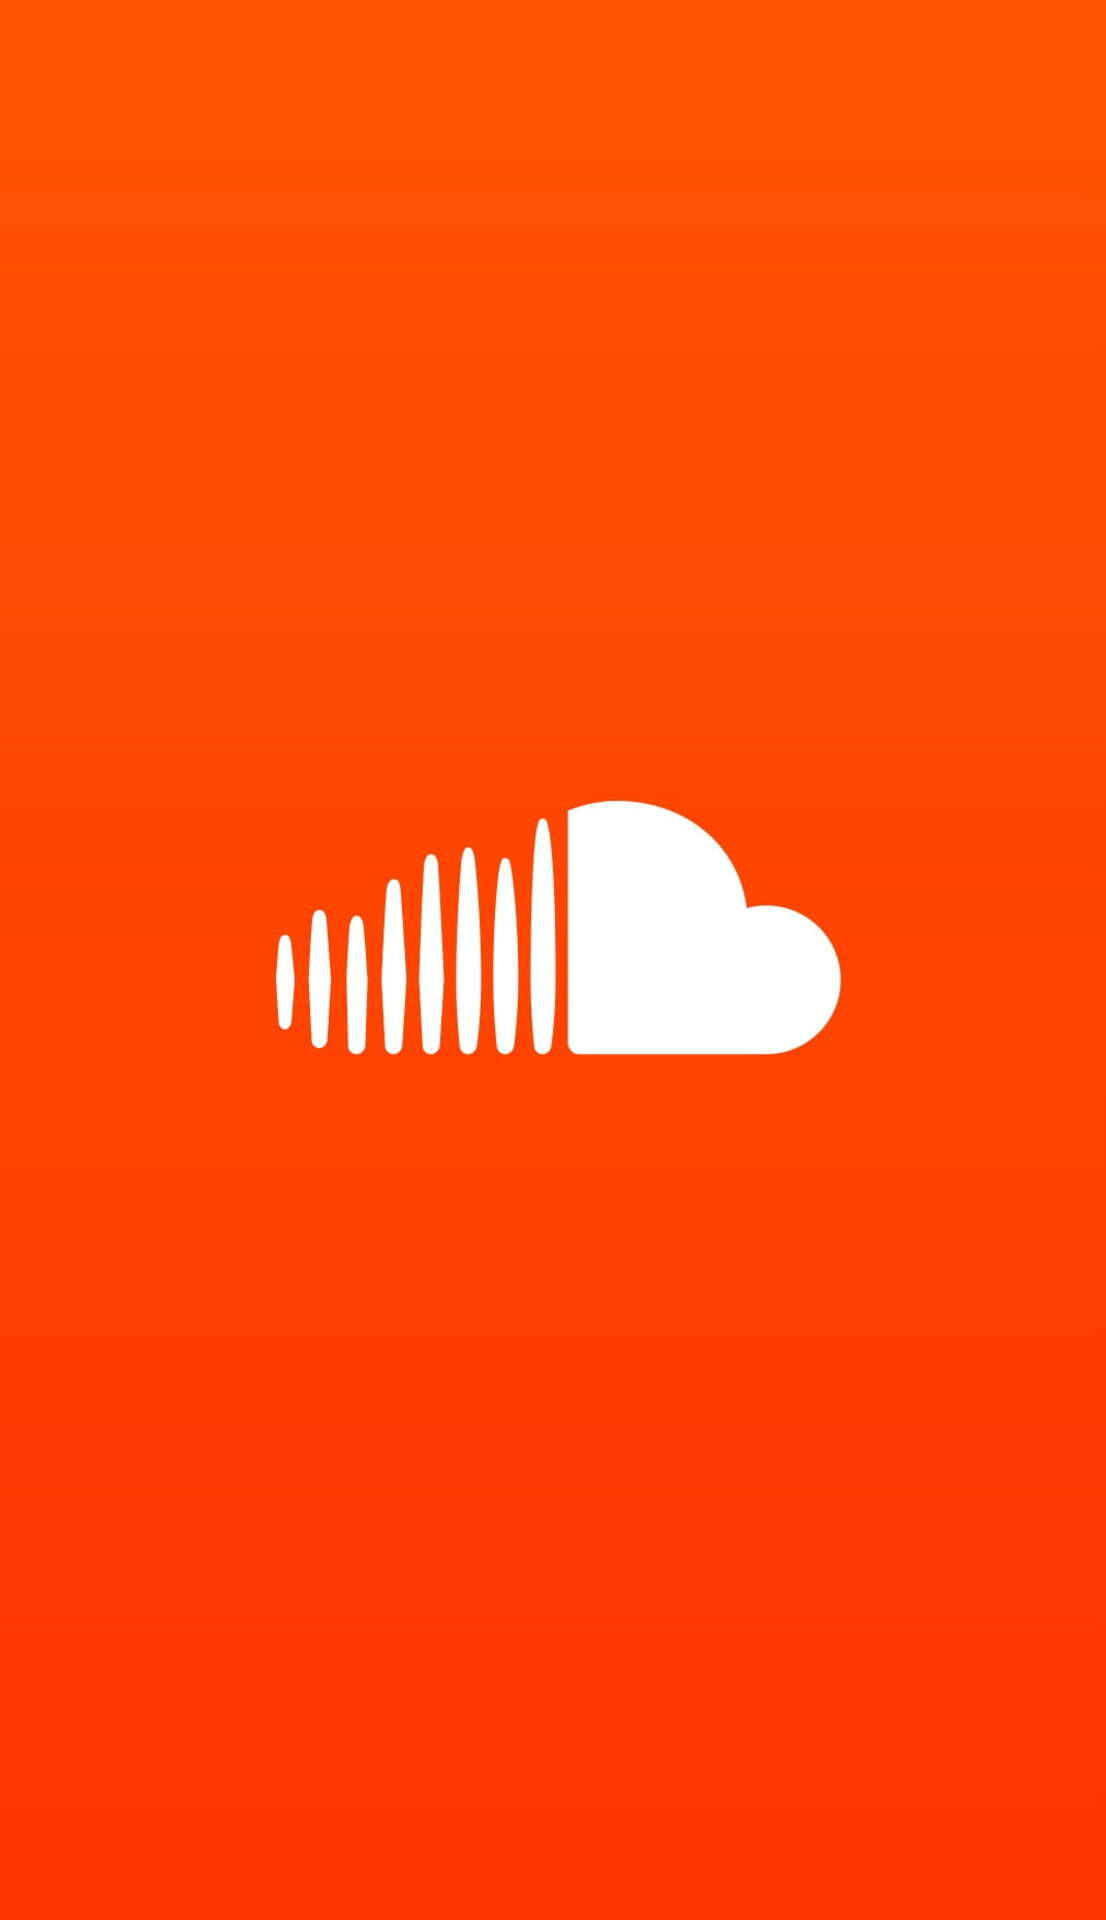 Soundcloud Music Sharing Icon Background